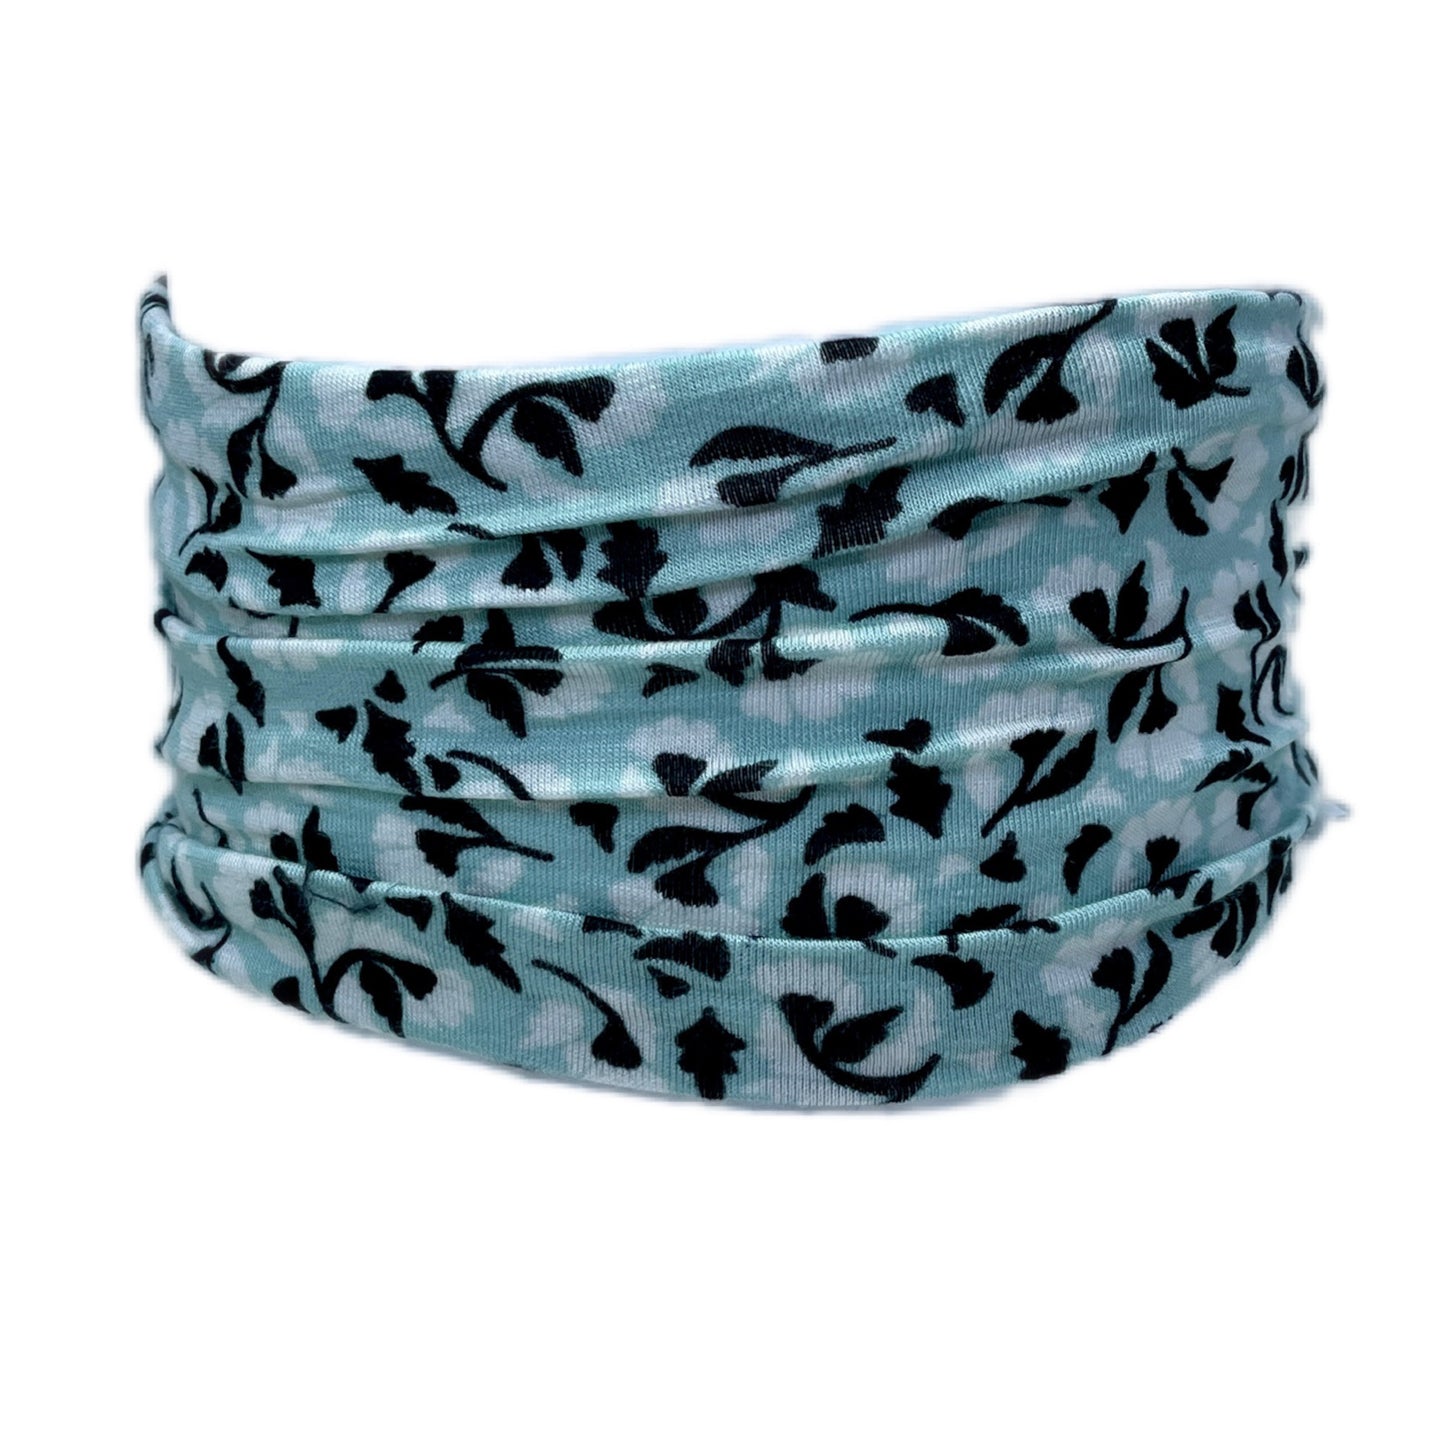 Comfortable Aqua Yoga Headband - Stay Put During Your Practice